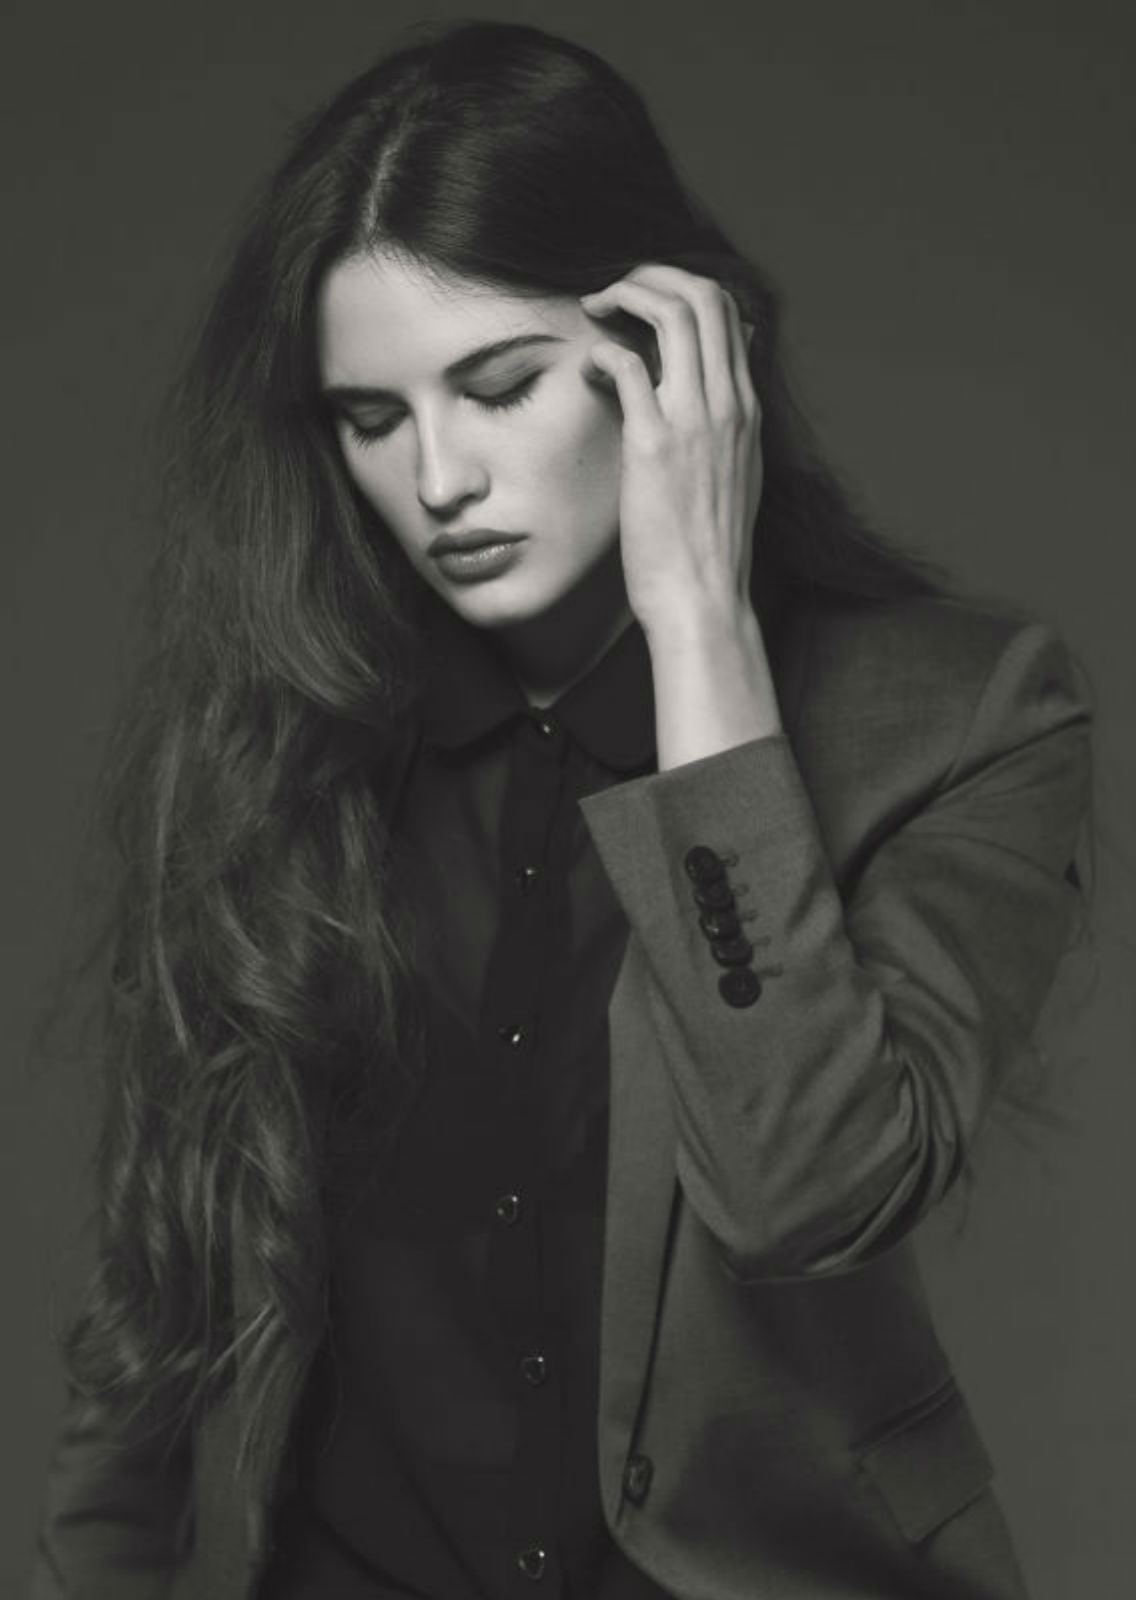 ESTHER BLASCO . Carmen Duran Model Agency.